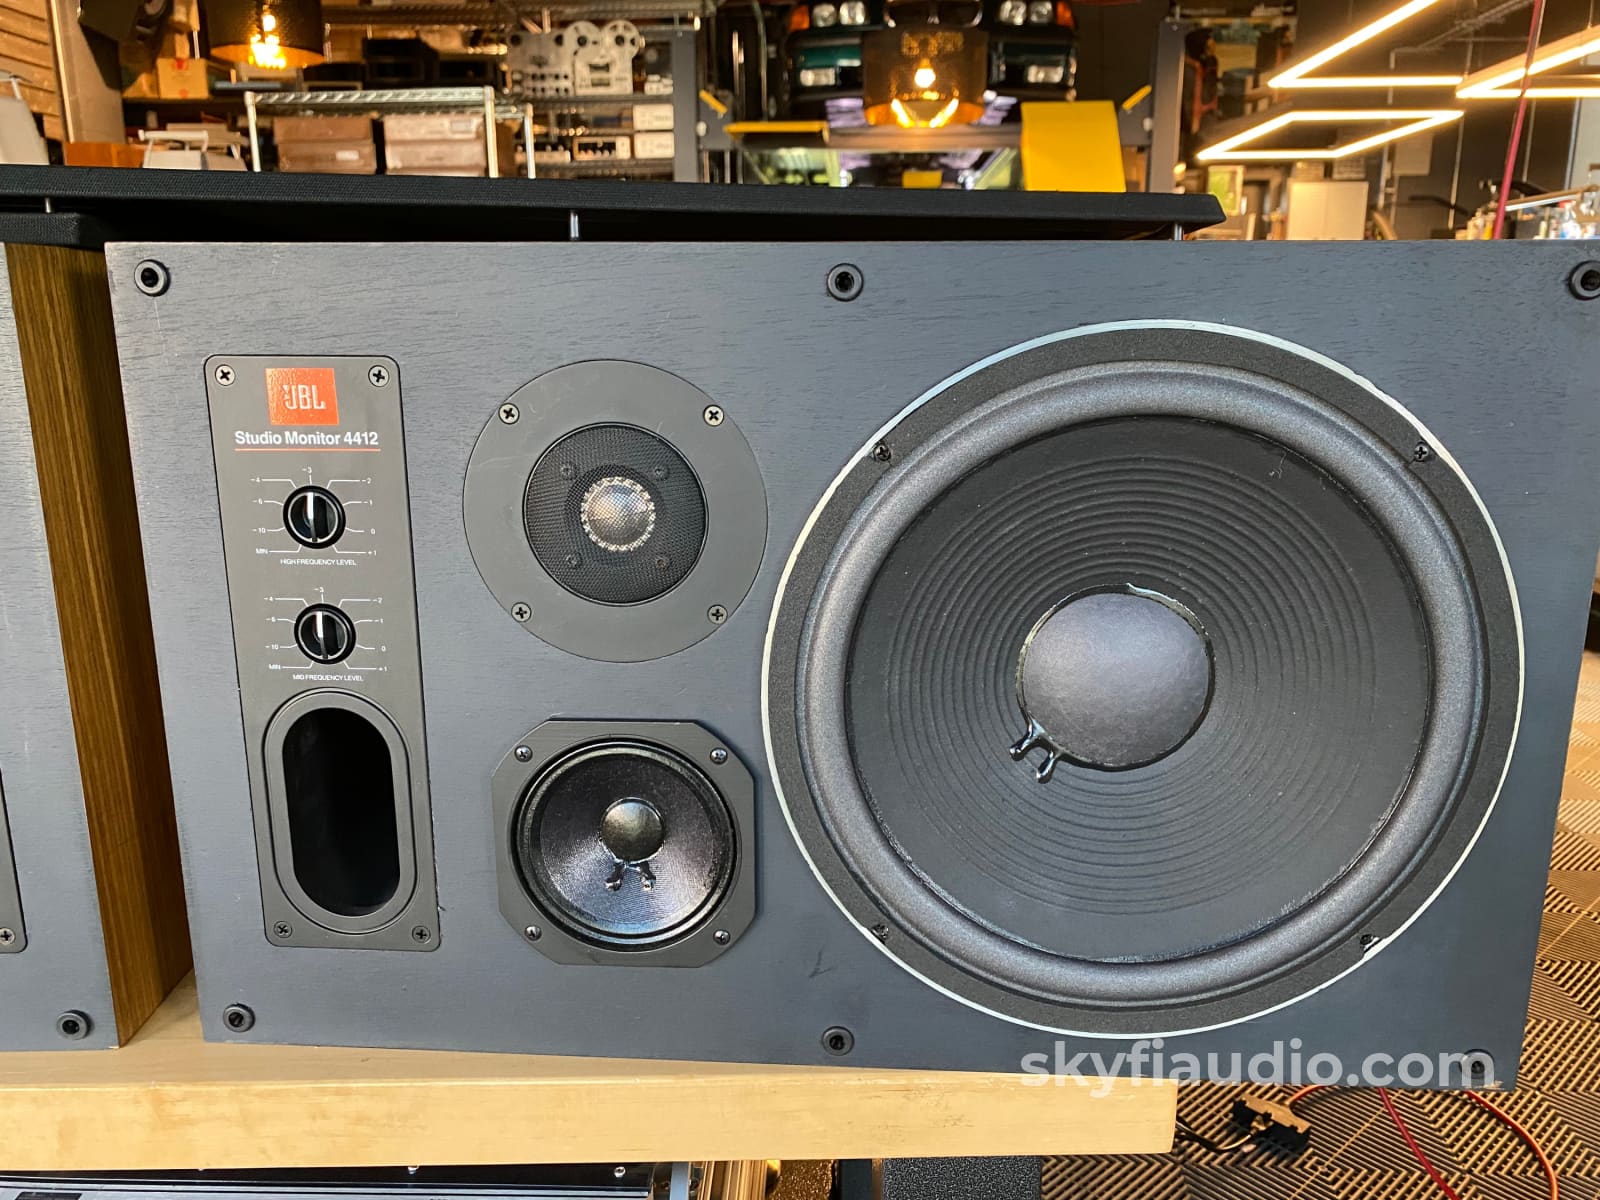 Jbl 4412 Vintage Studio Monitor Speakers In Survivor Condition - Last Pair Available